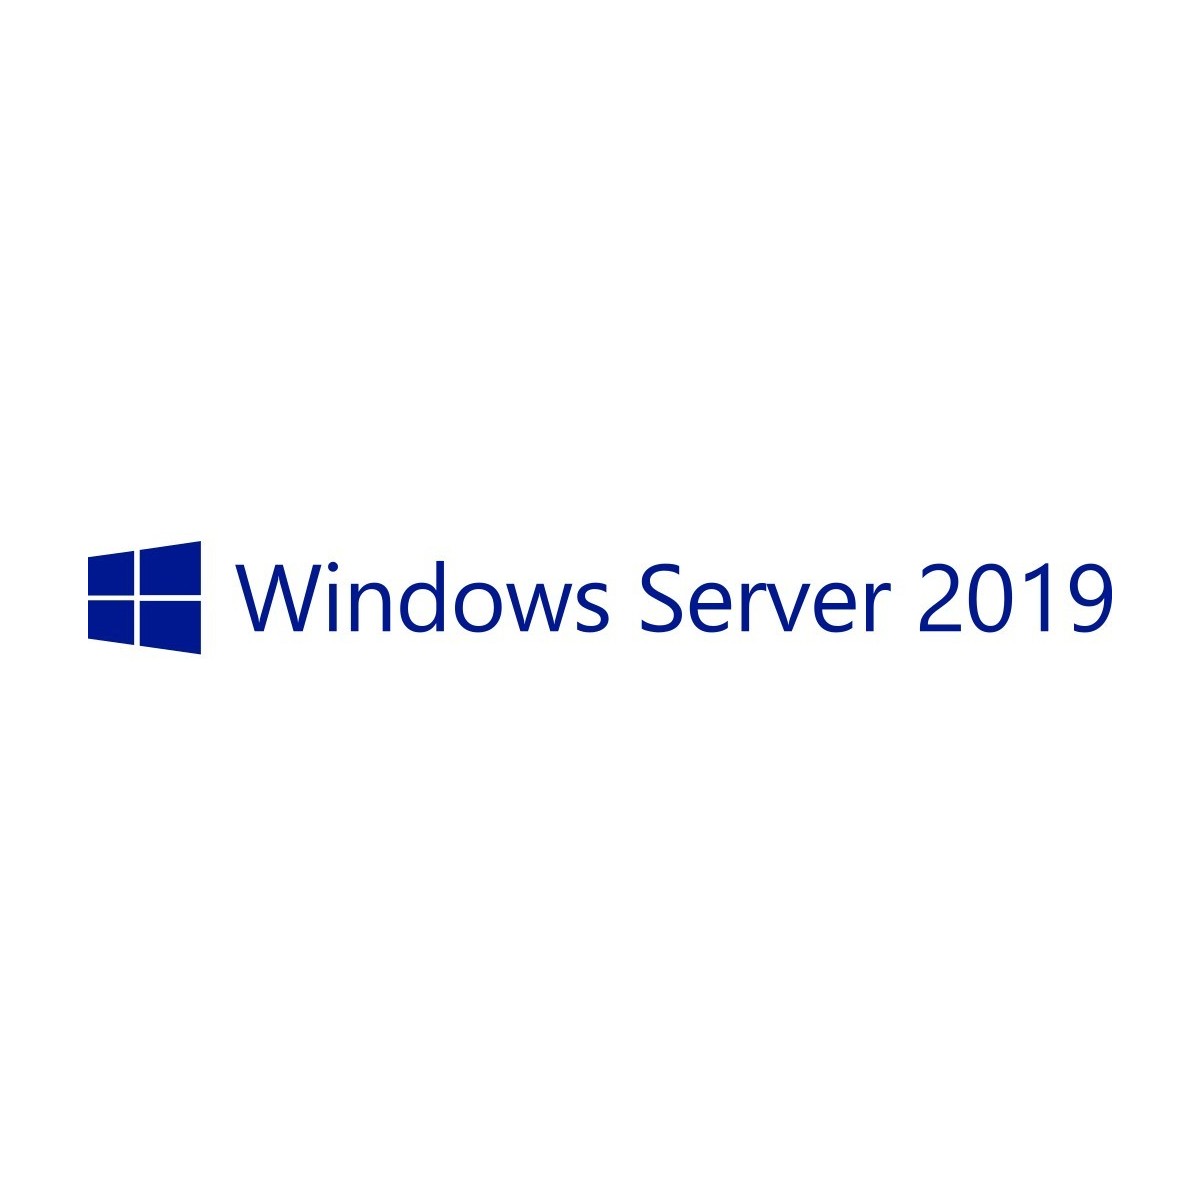 HPE Microsoft Windows Server 2019 - 1 license(s) - Client Access License (CAL) - License